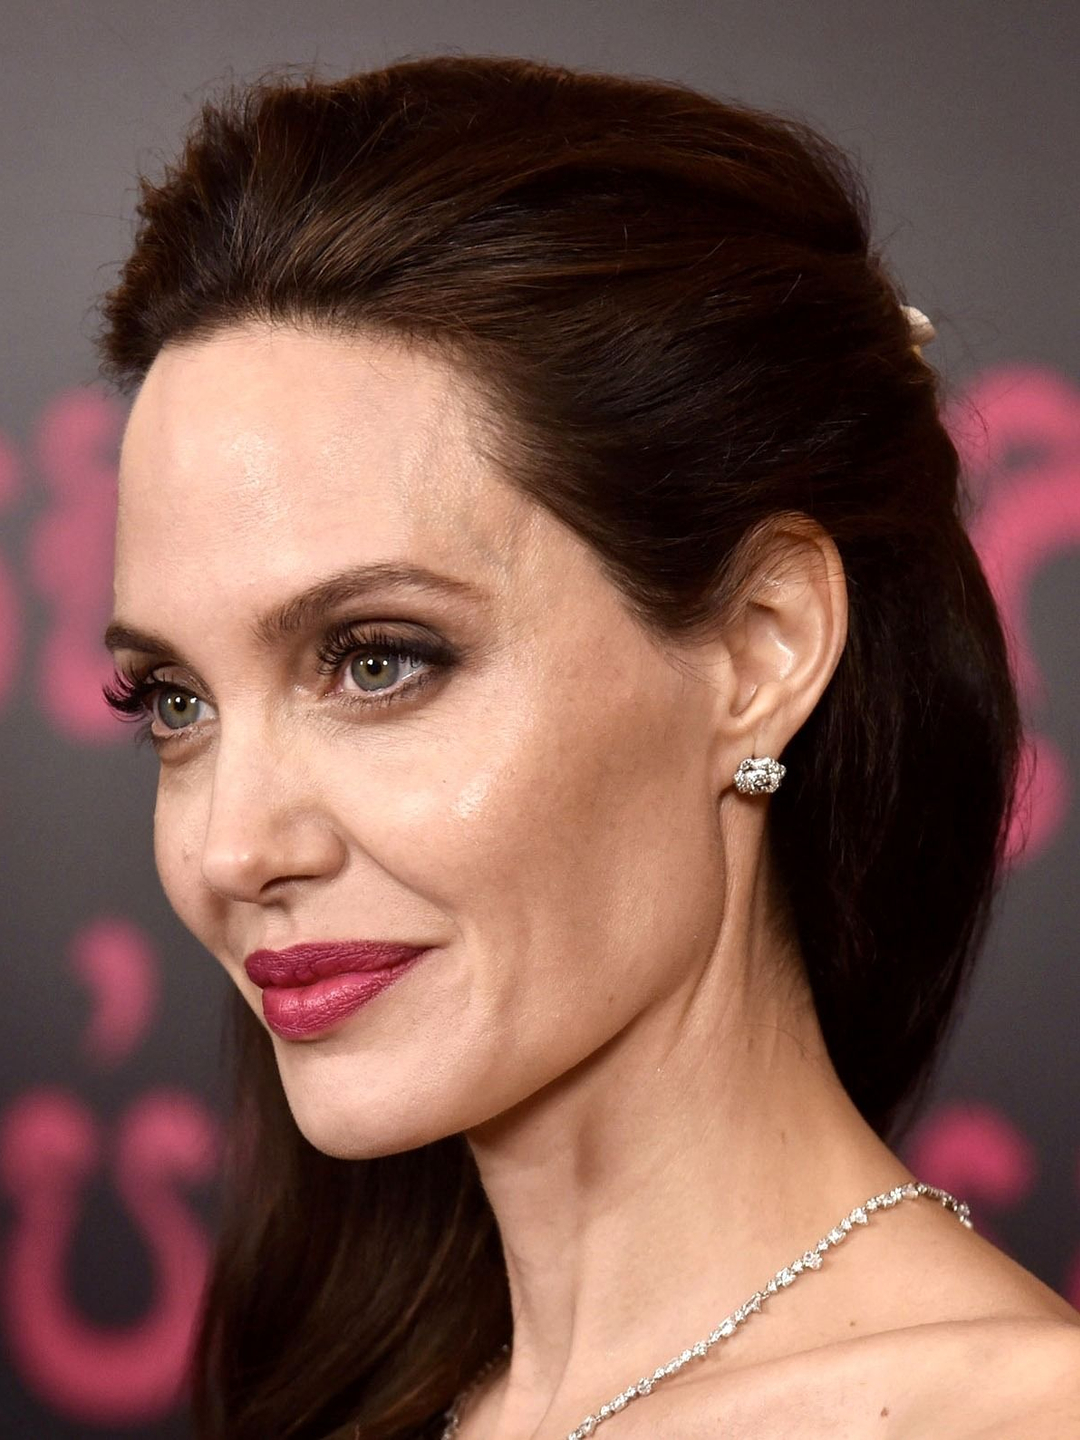 Angelina Jolie personal traits